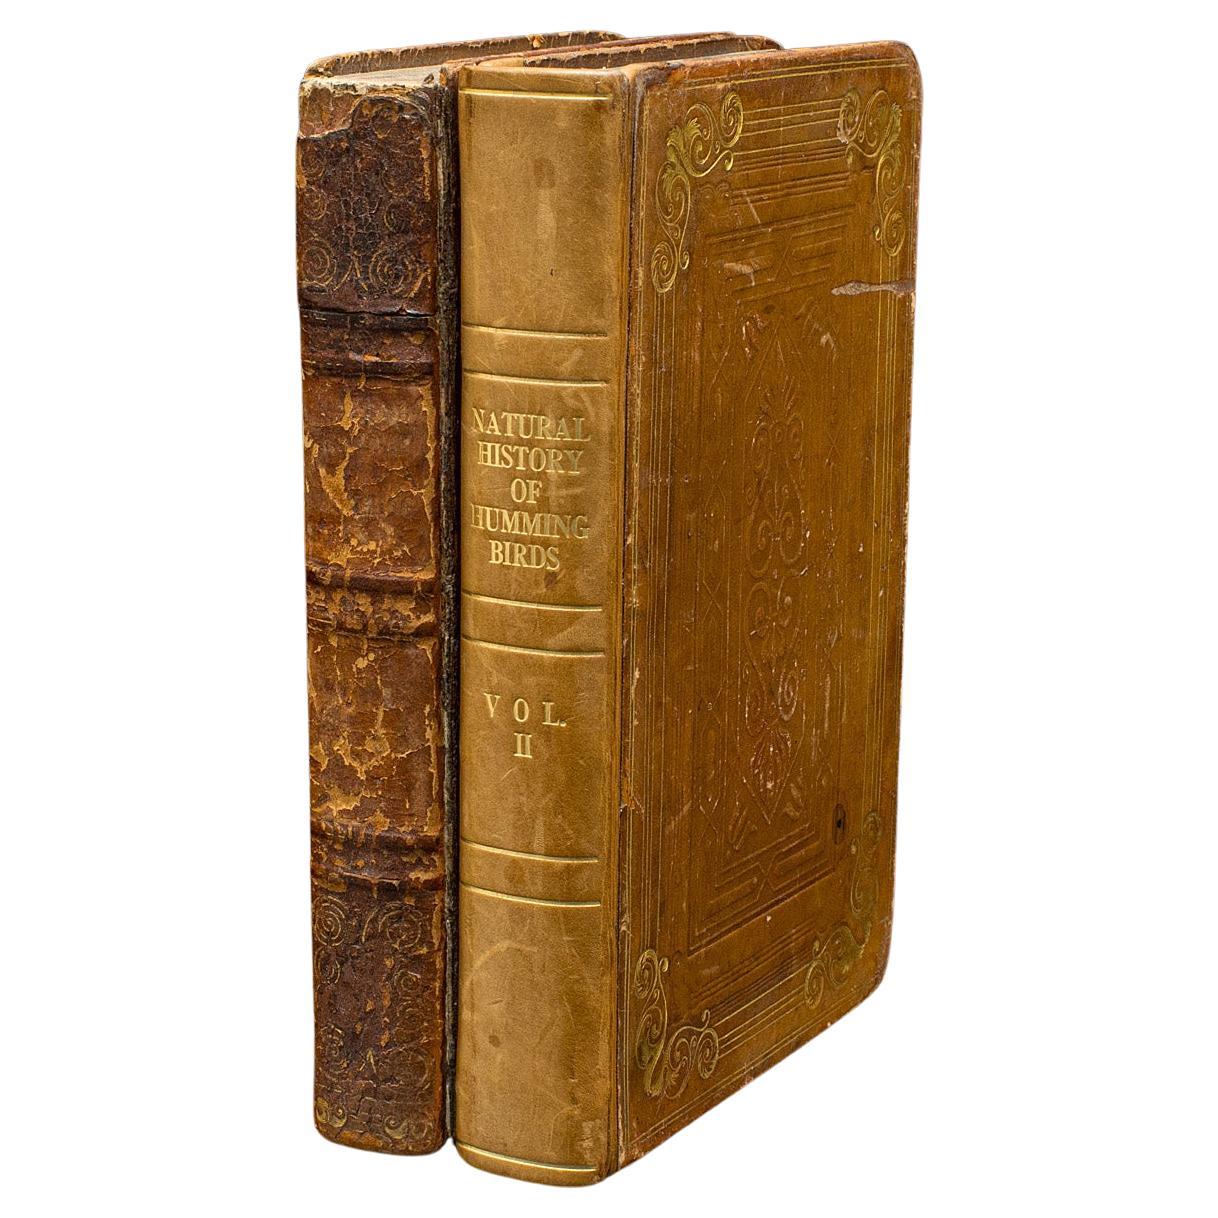 Pair Of Antique Ornithology Books, English, 2 Vols, Hummingbirds, Circa 1830